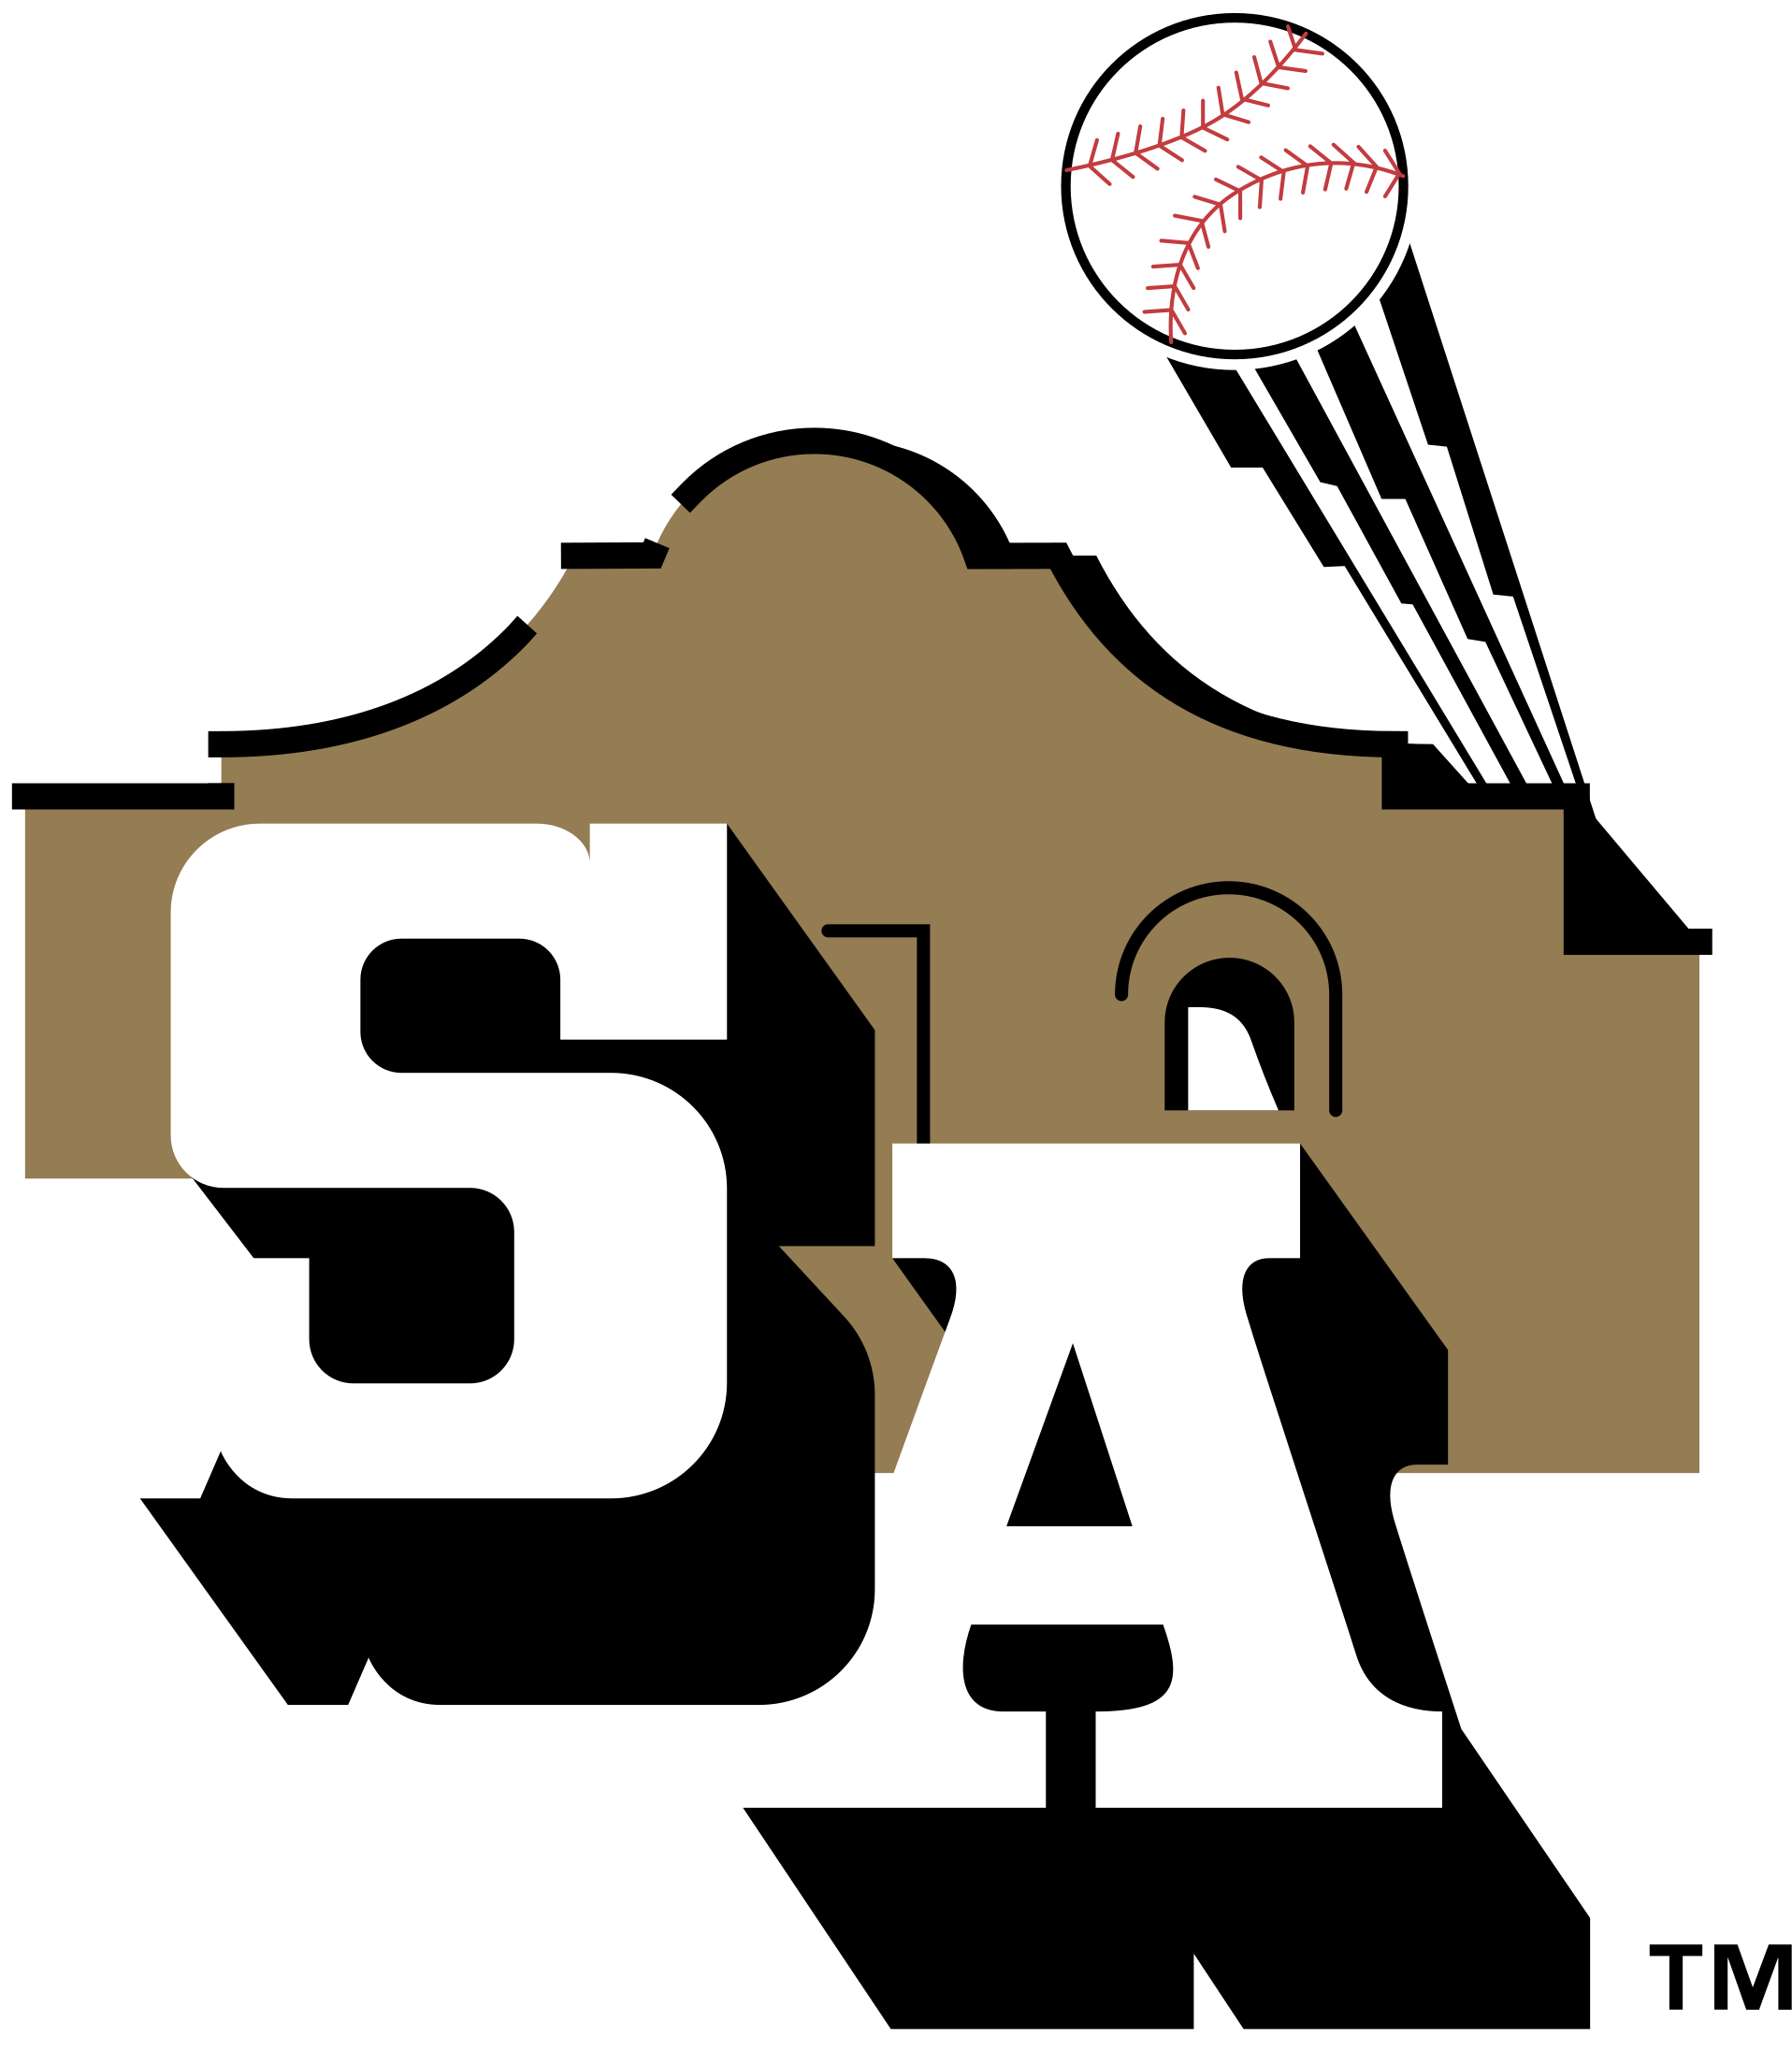 San Antonio Missions Logo Black And White - San Antonio Missions Baseball (2400x2400)